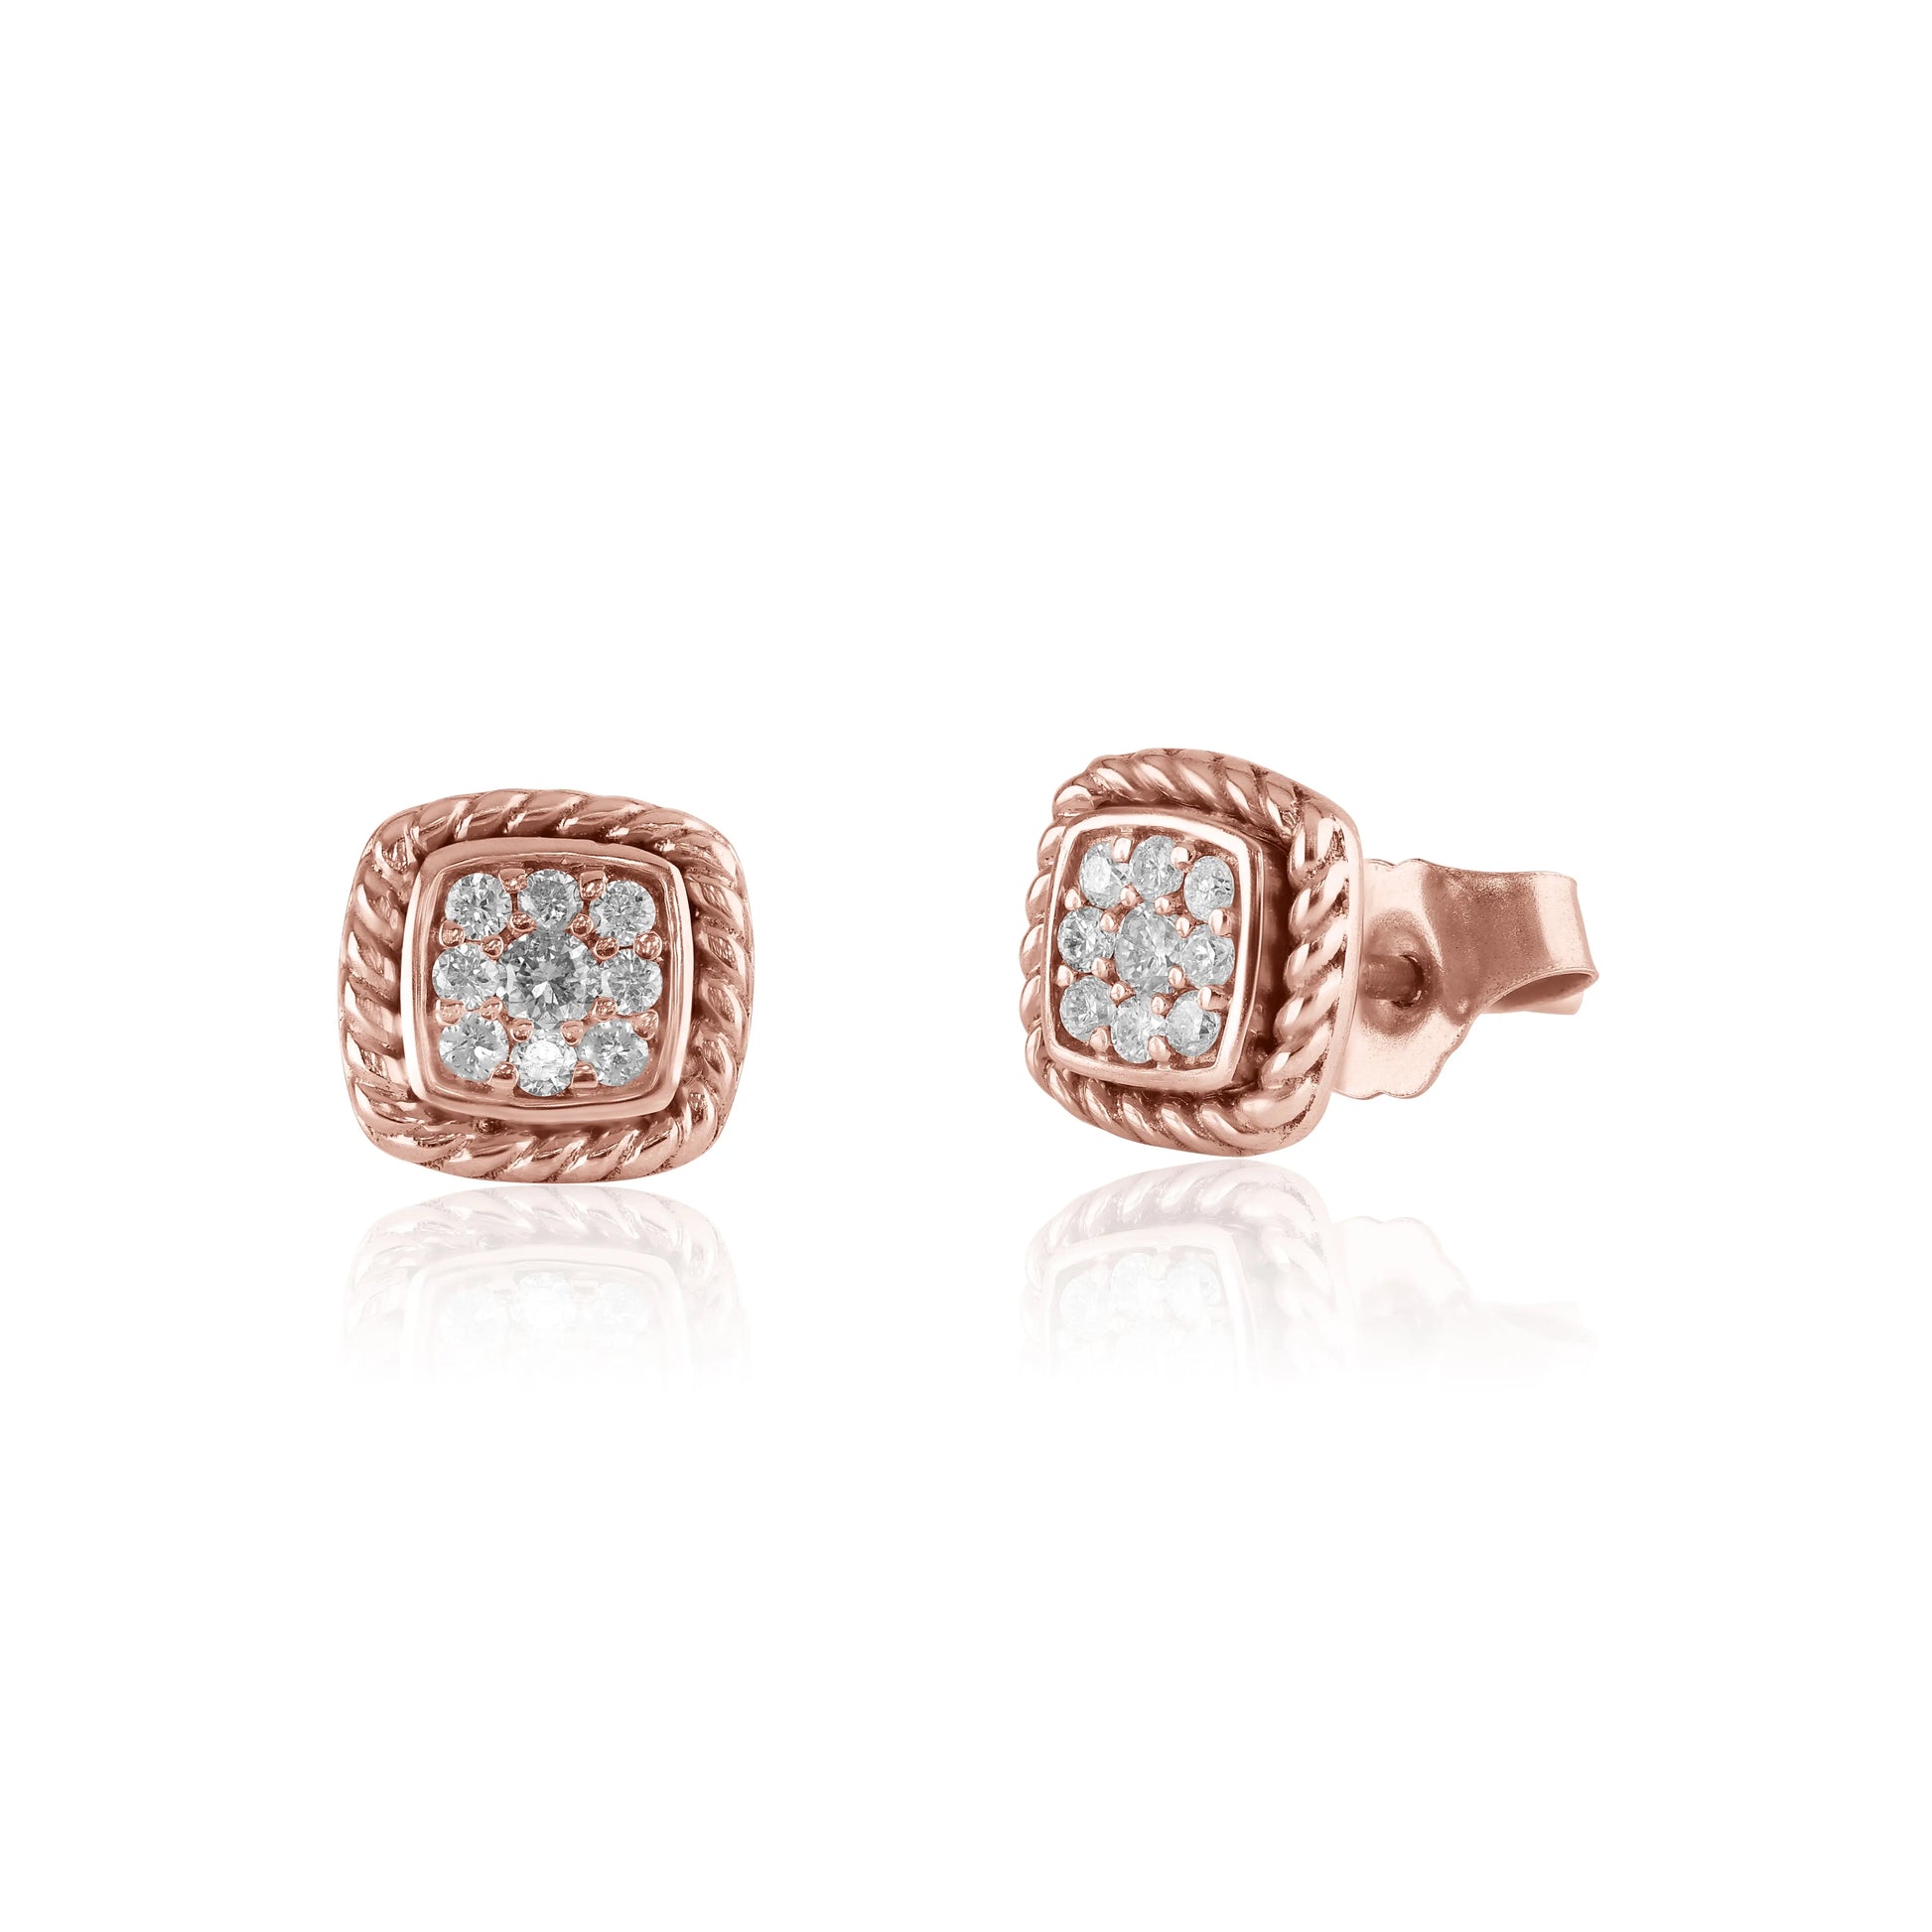 Rose Gold Earrings Rope Design Diamond Cluster Studs Danson Jewelers Danson Jewelers 